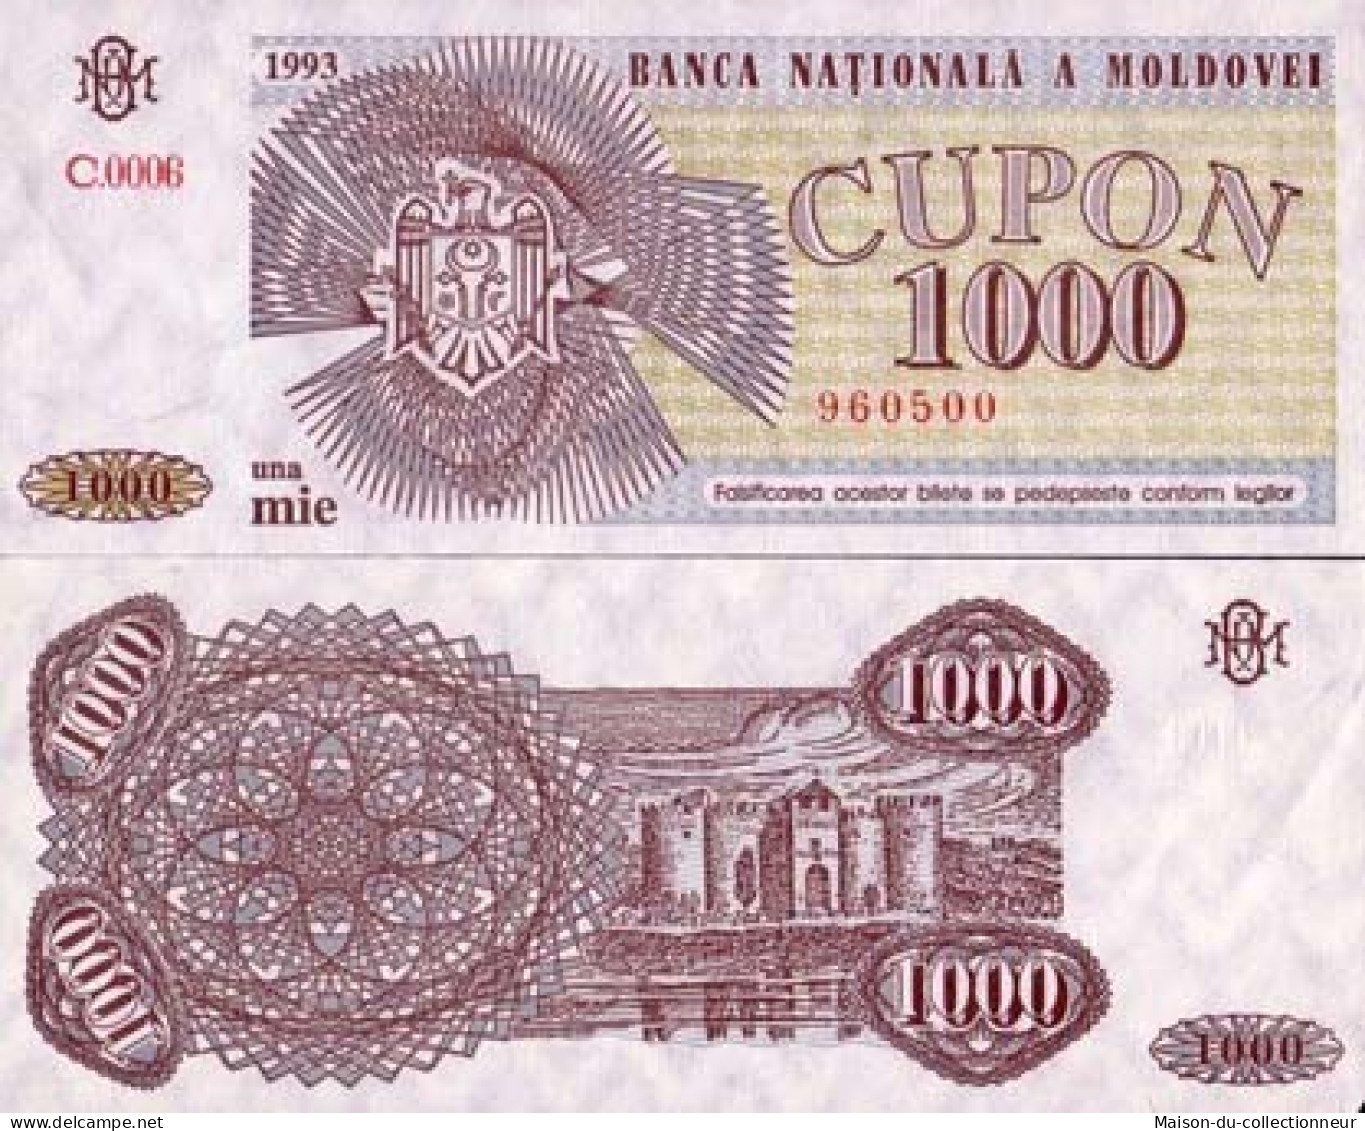 Billets Banque Moldavie Pk N°  3 - 1000 Cupon - Moldavie